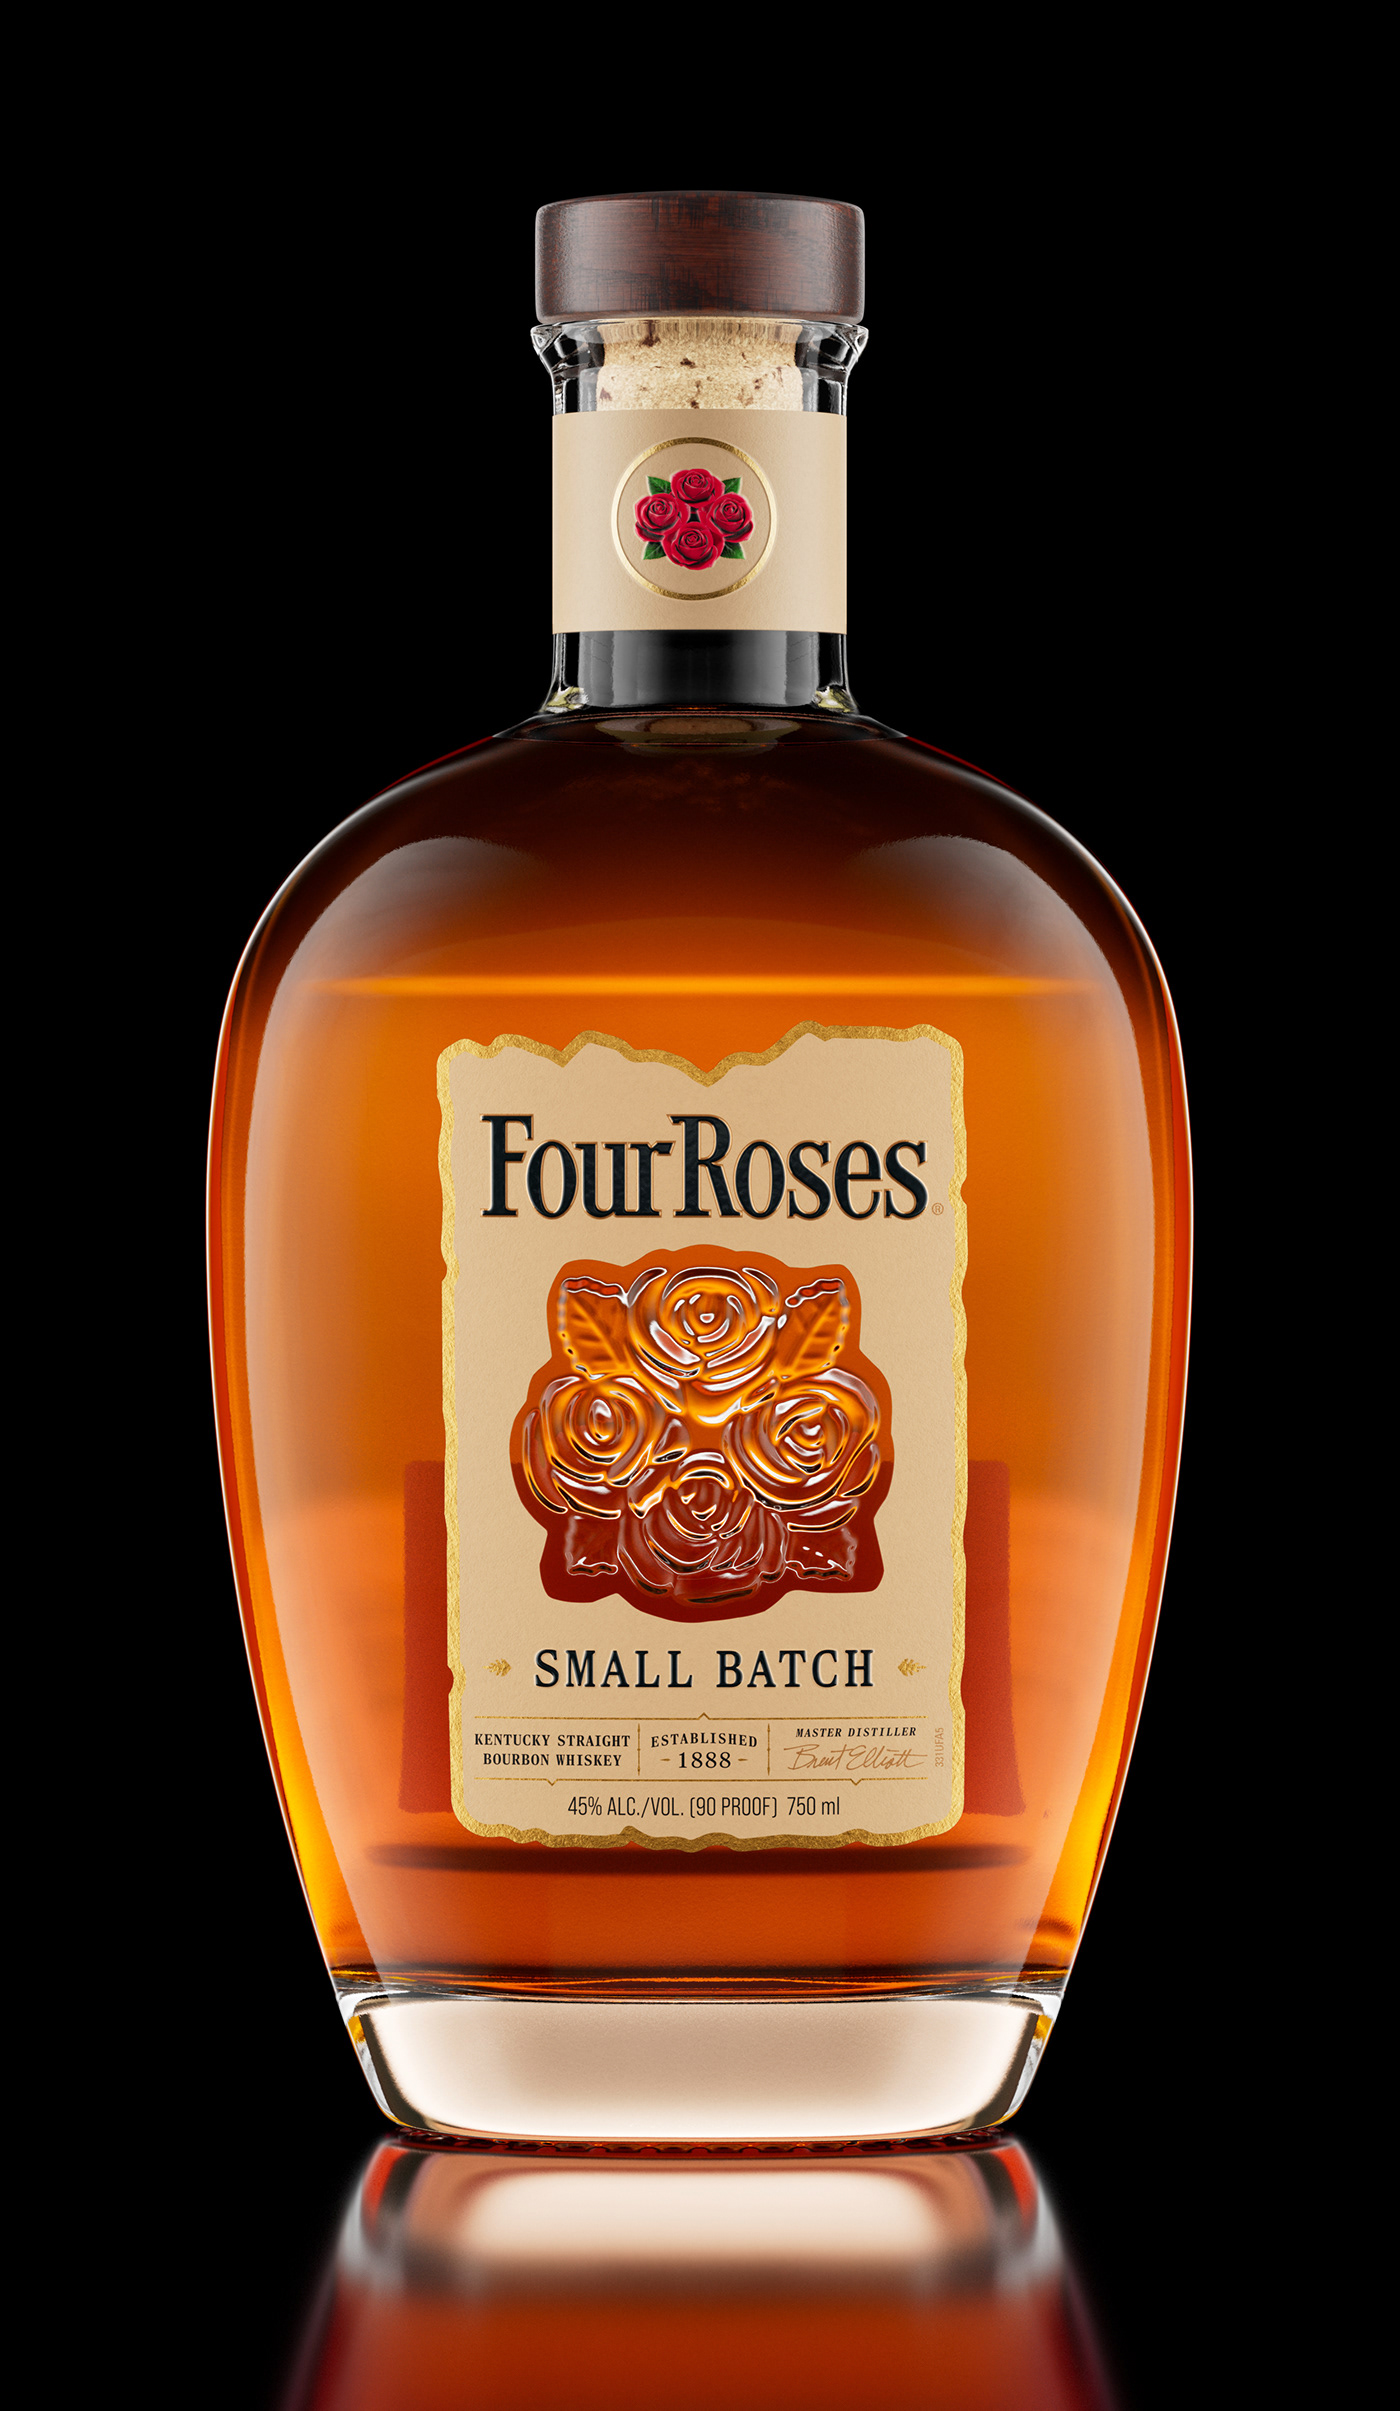 Four Roses bourbon Whiskey CGI visualization Render rose brand identity cinema 4d motion graphics 